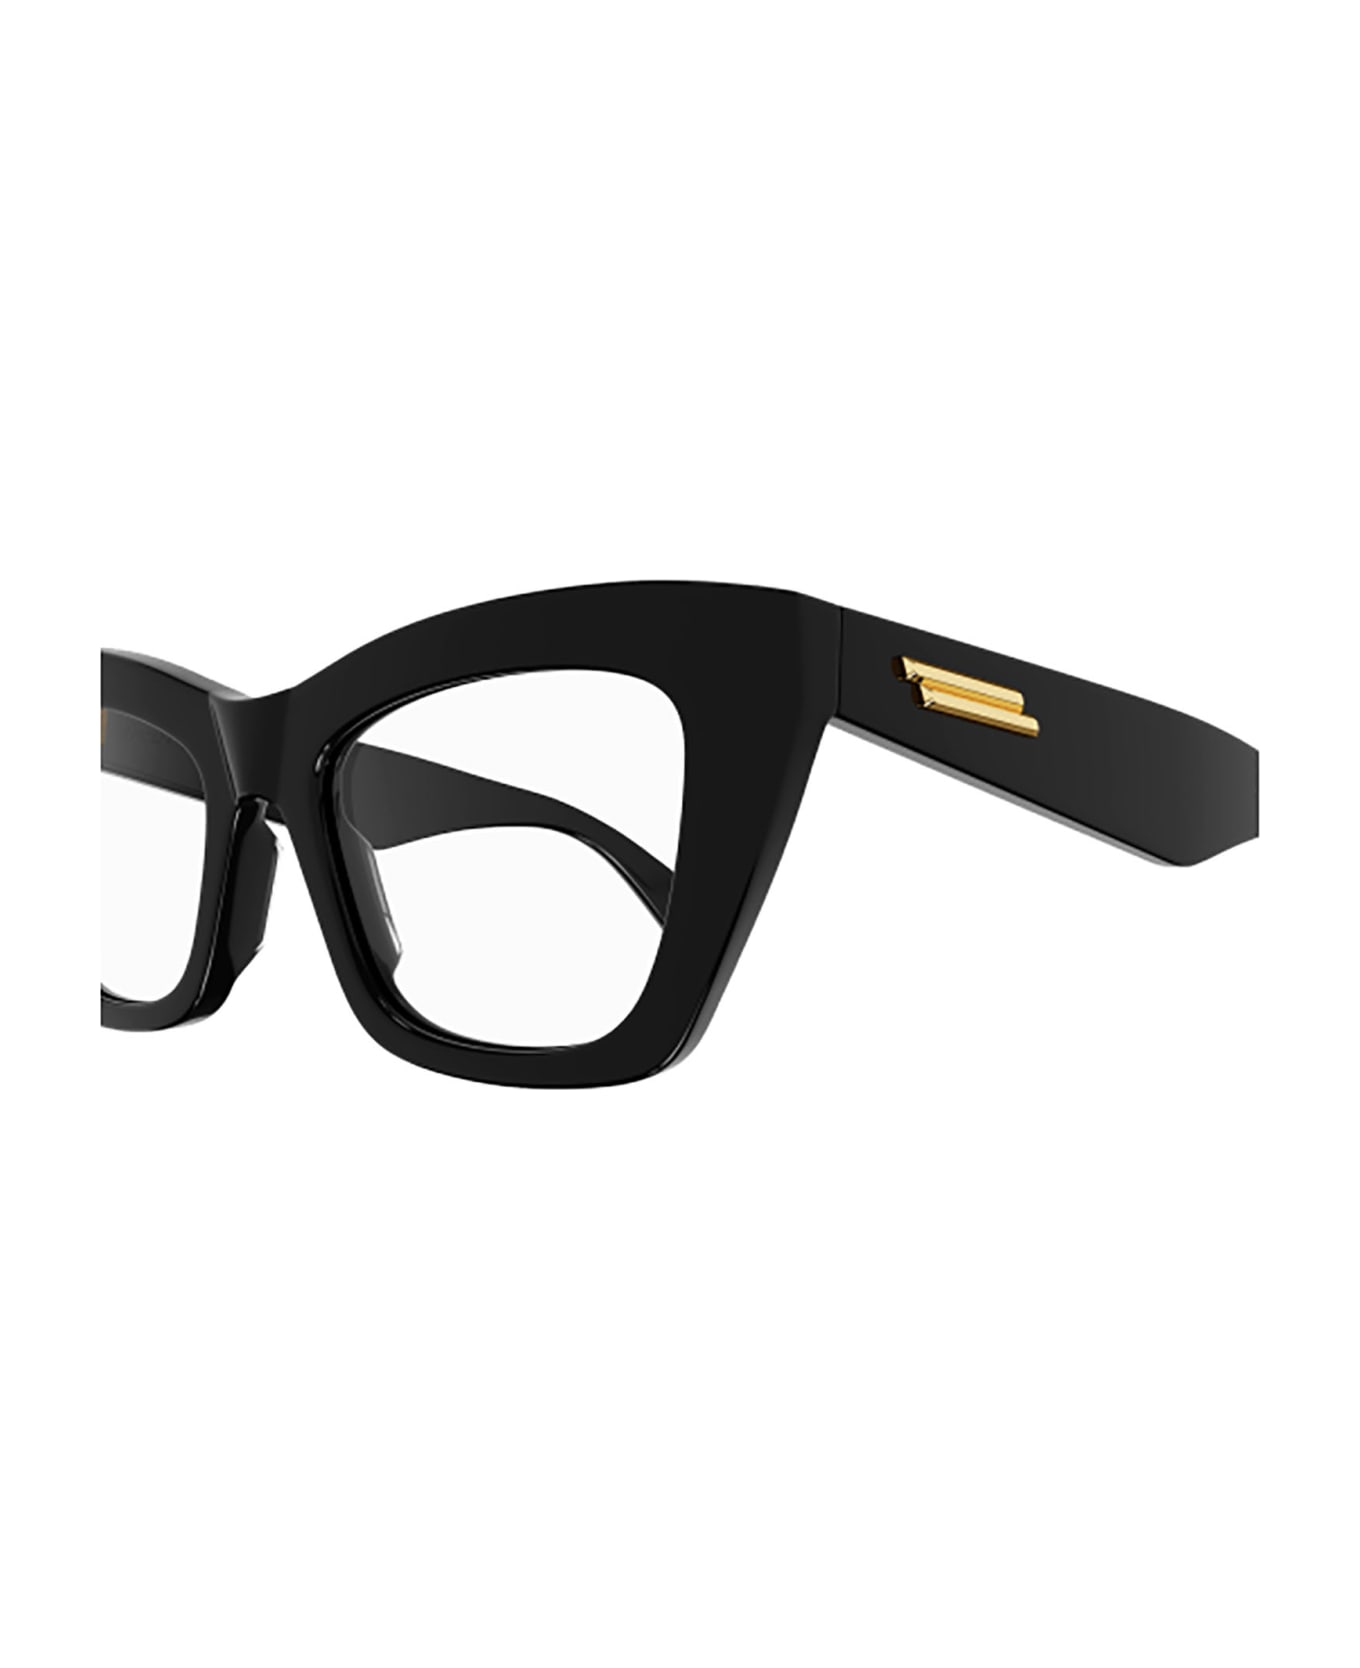 Bottega Veneta Eyewear 1g0g4n70a Glasses - 001 black black transpare